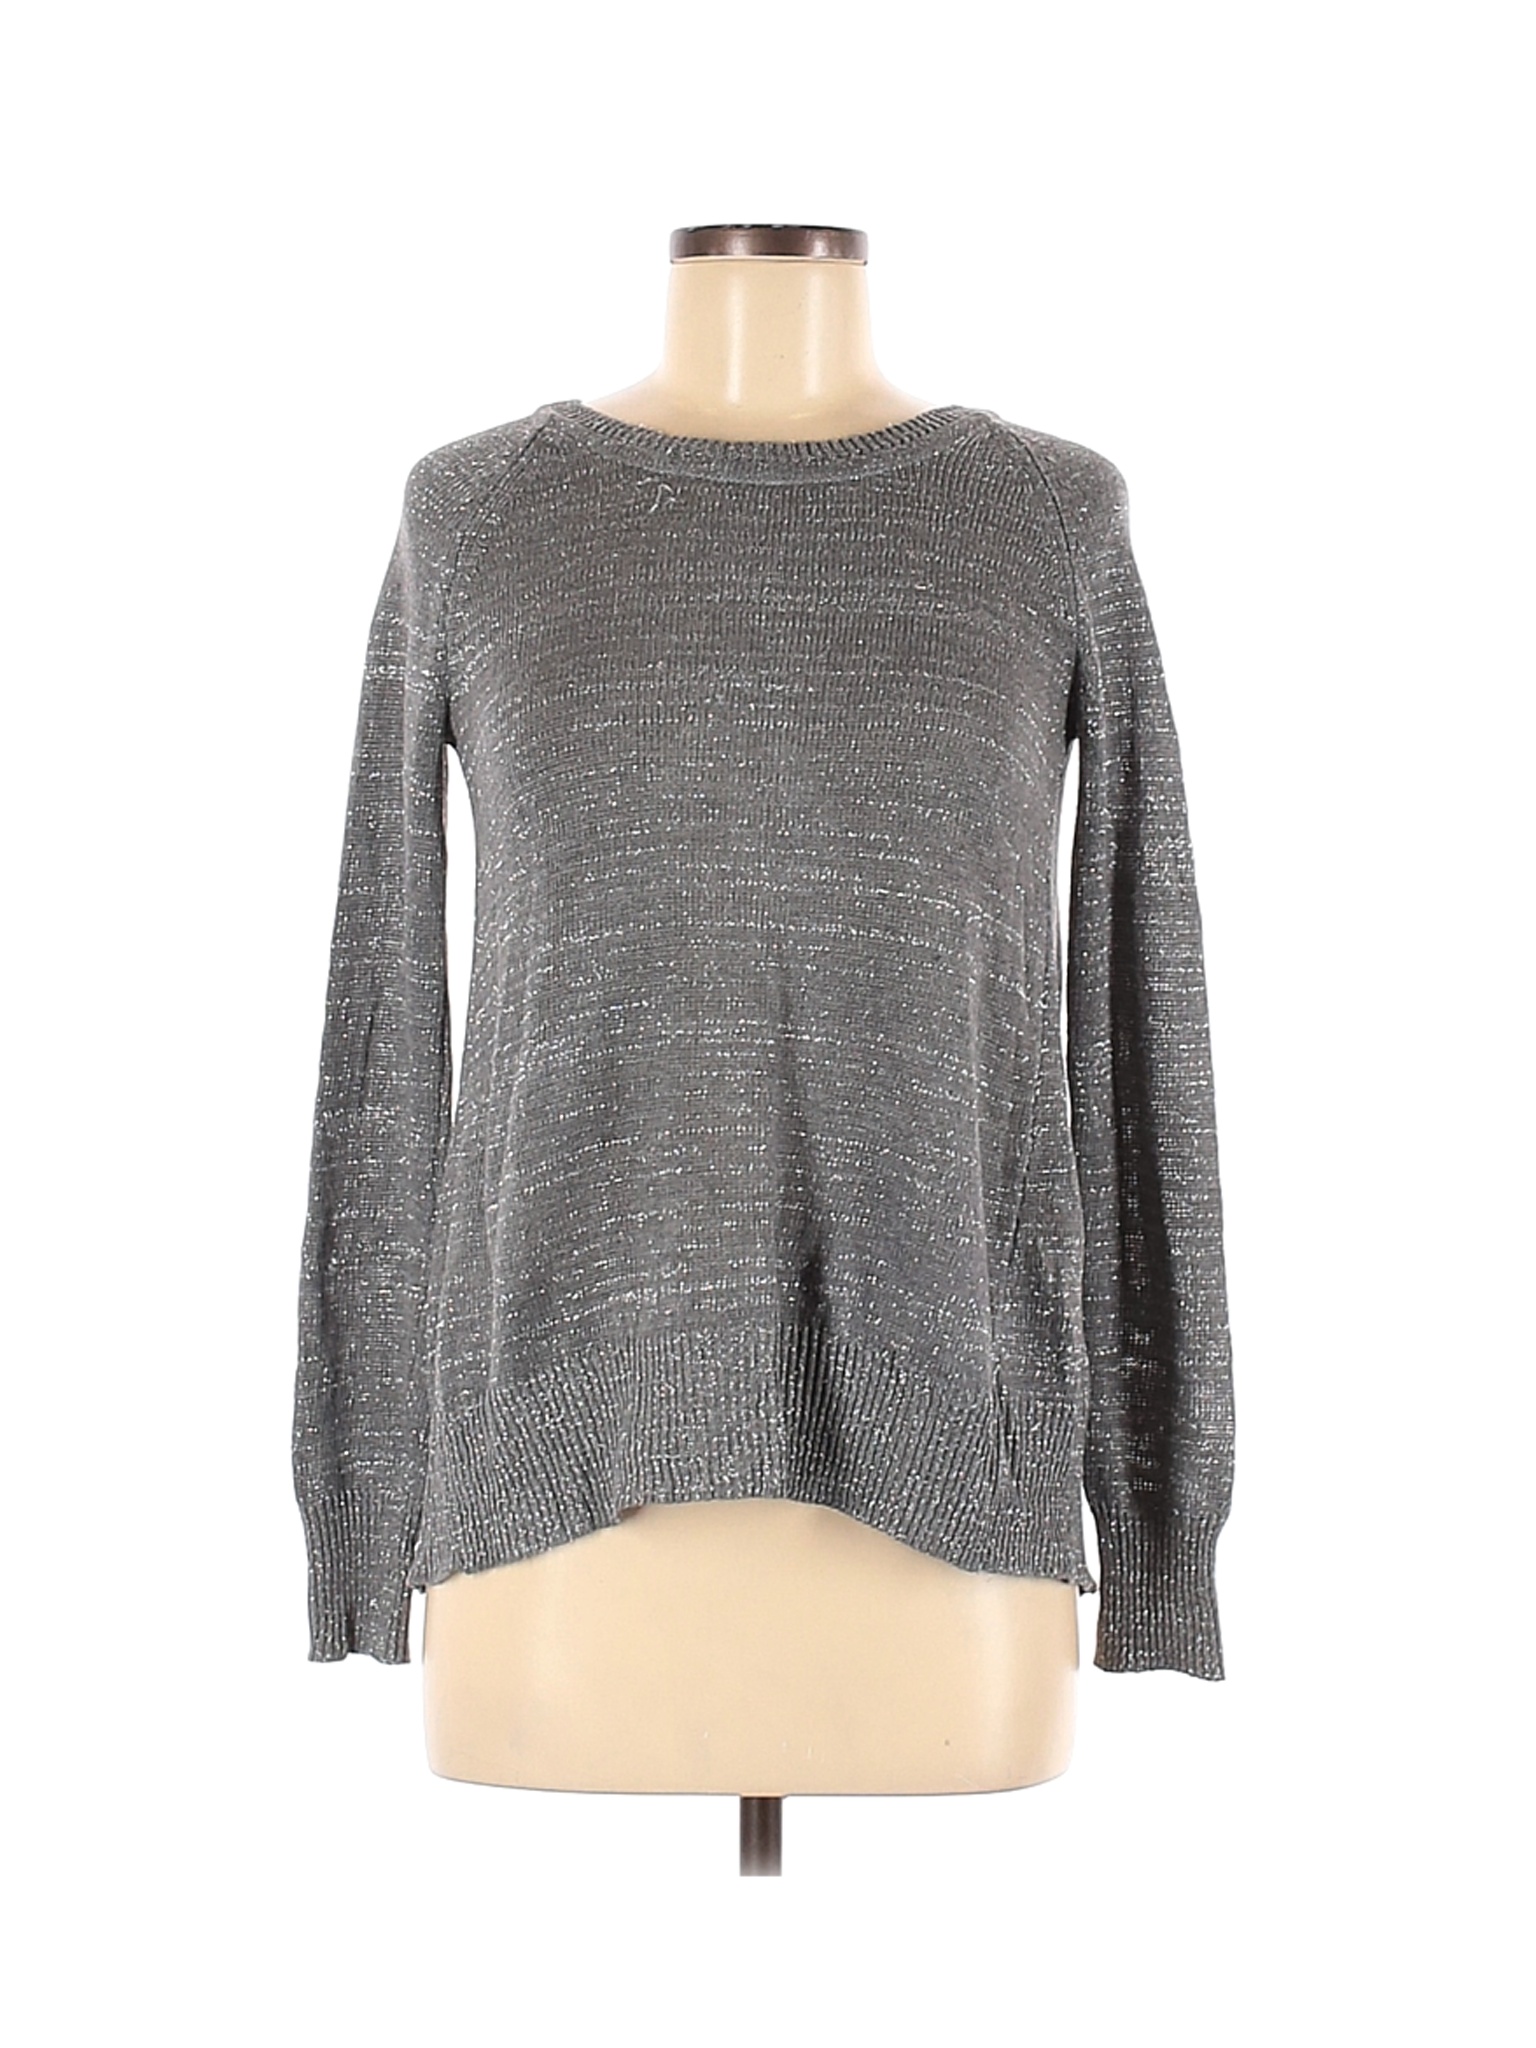 Love By Design Women Gray Pullover Sweater S | eBay